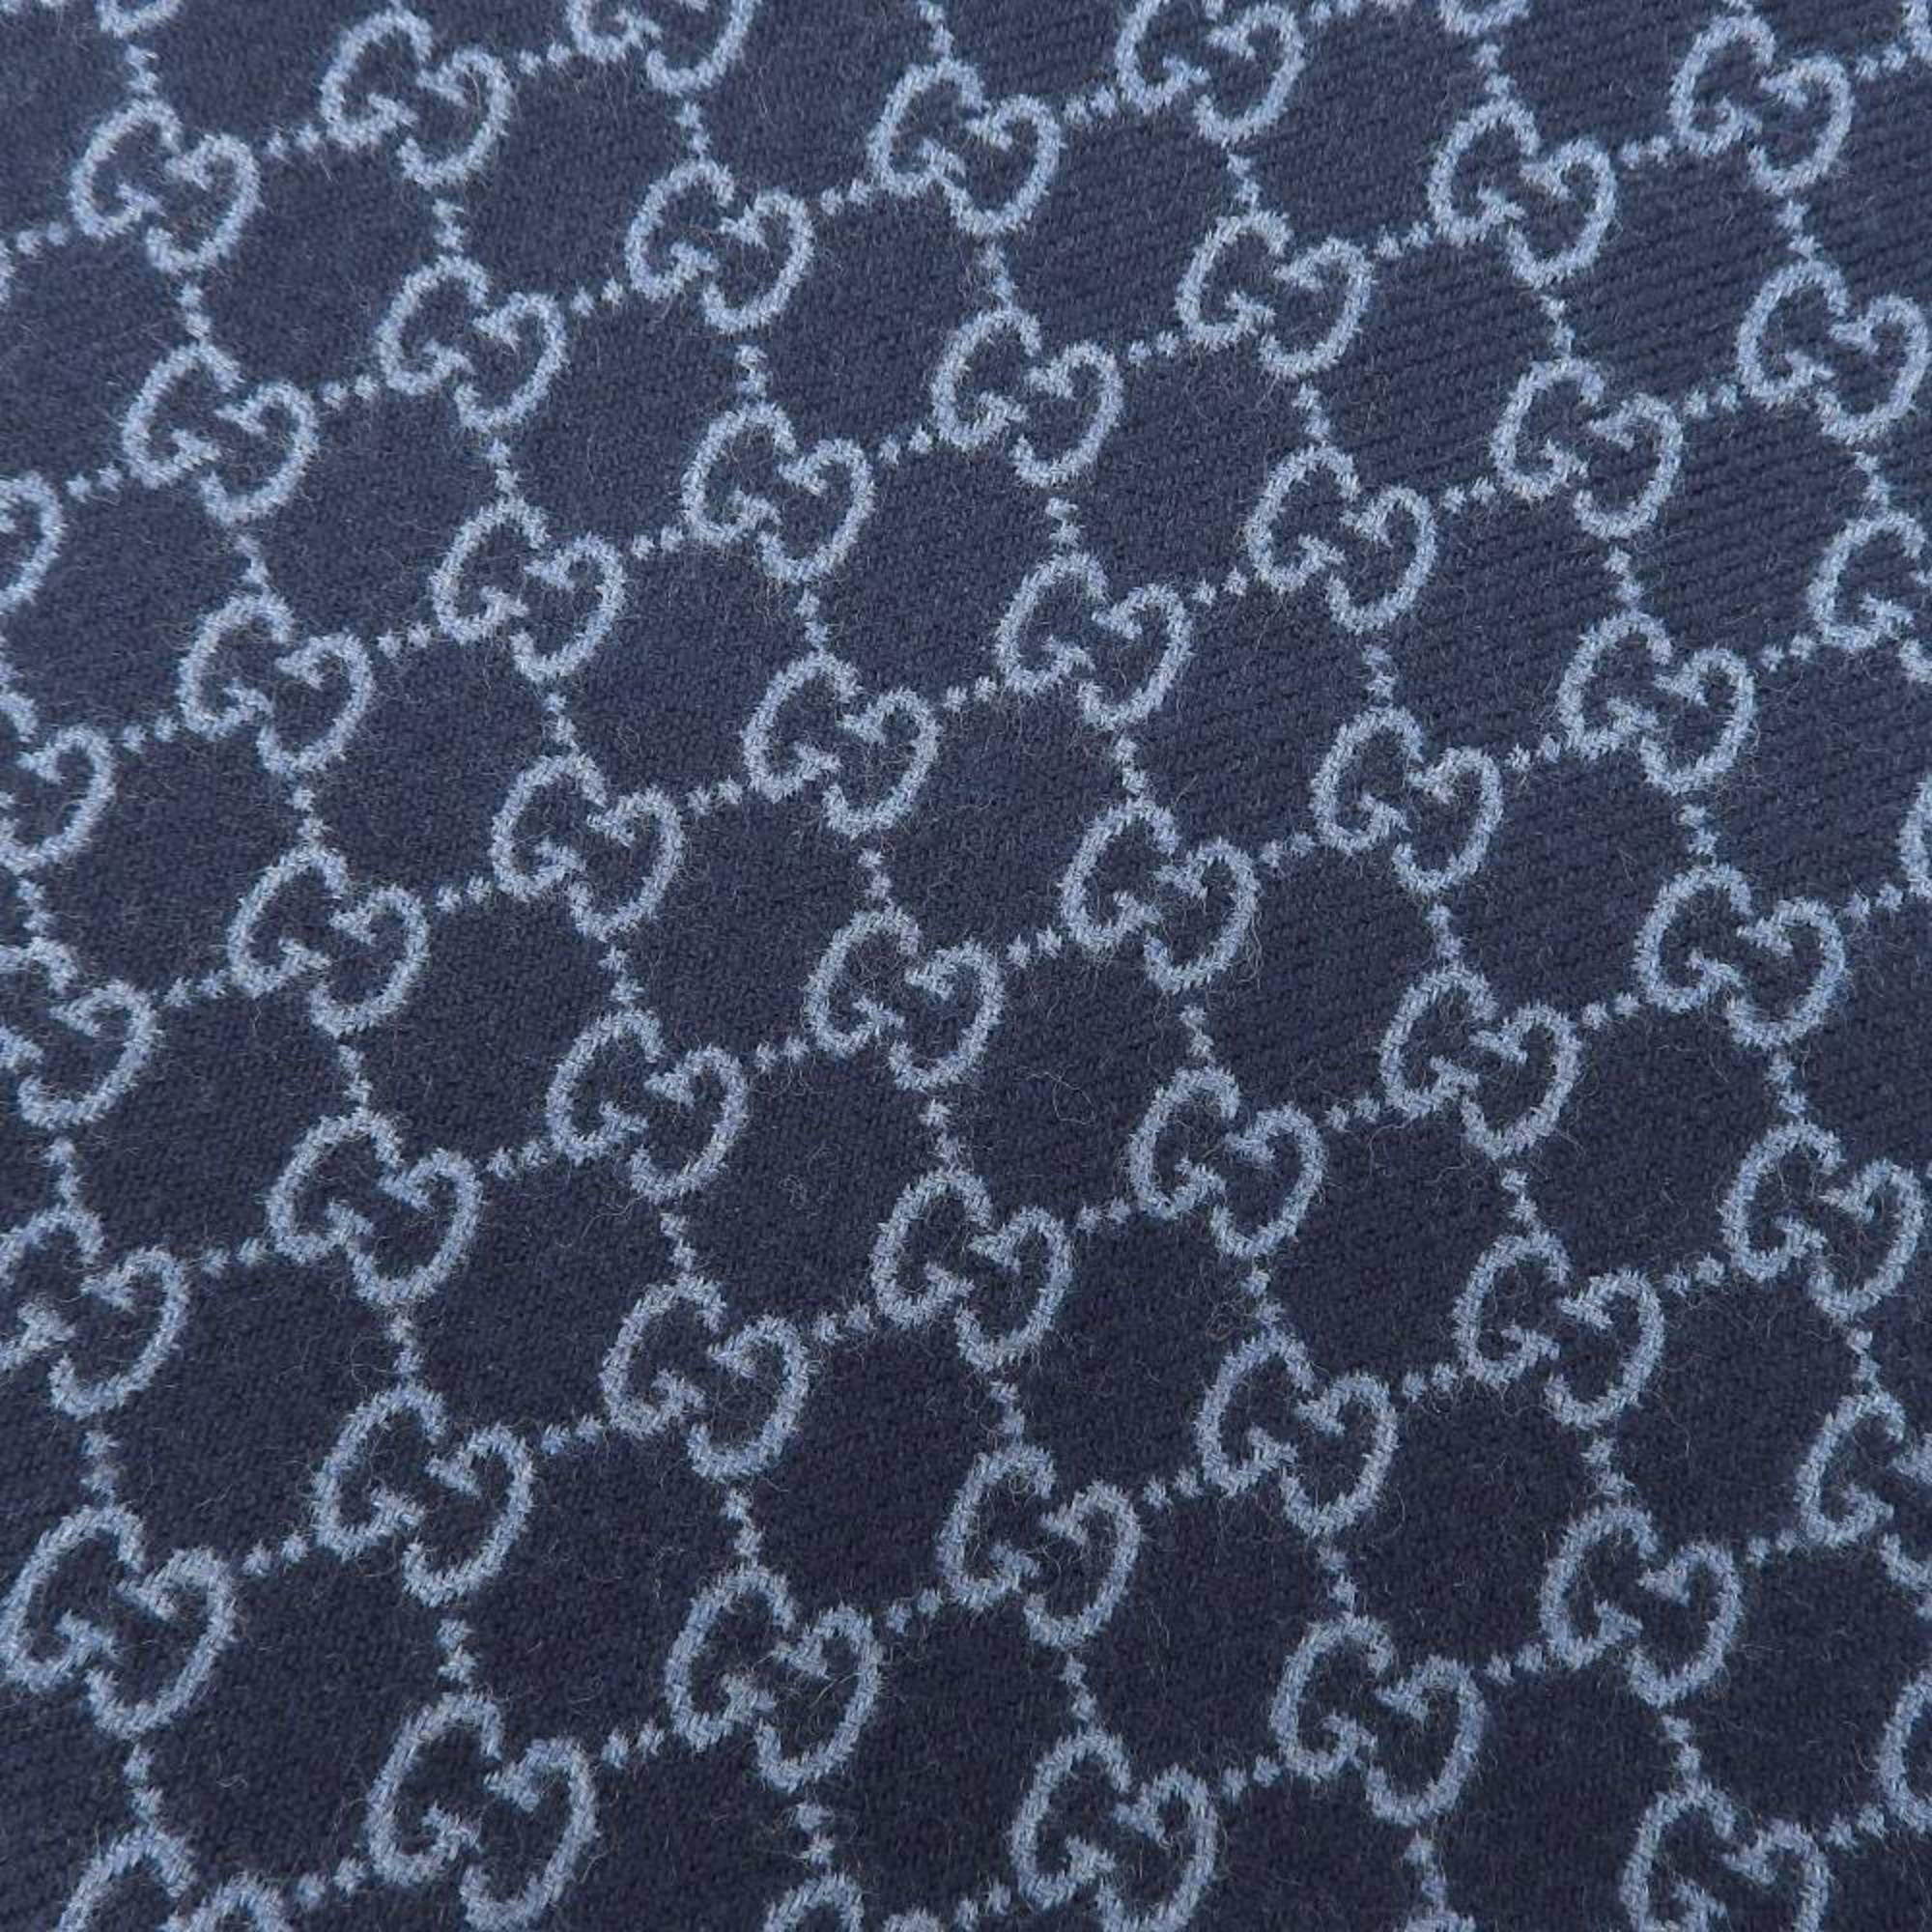 GUCCI GG pattern interlocking G scarf wool blue